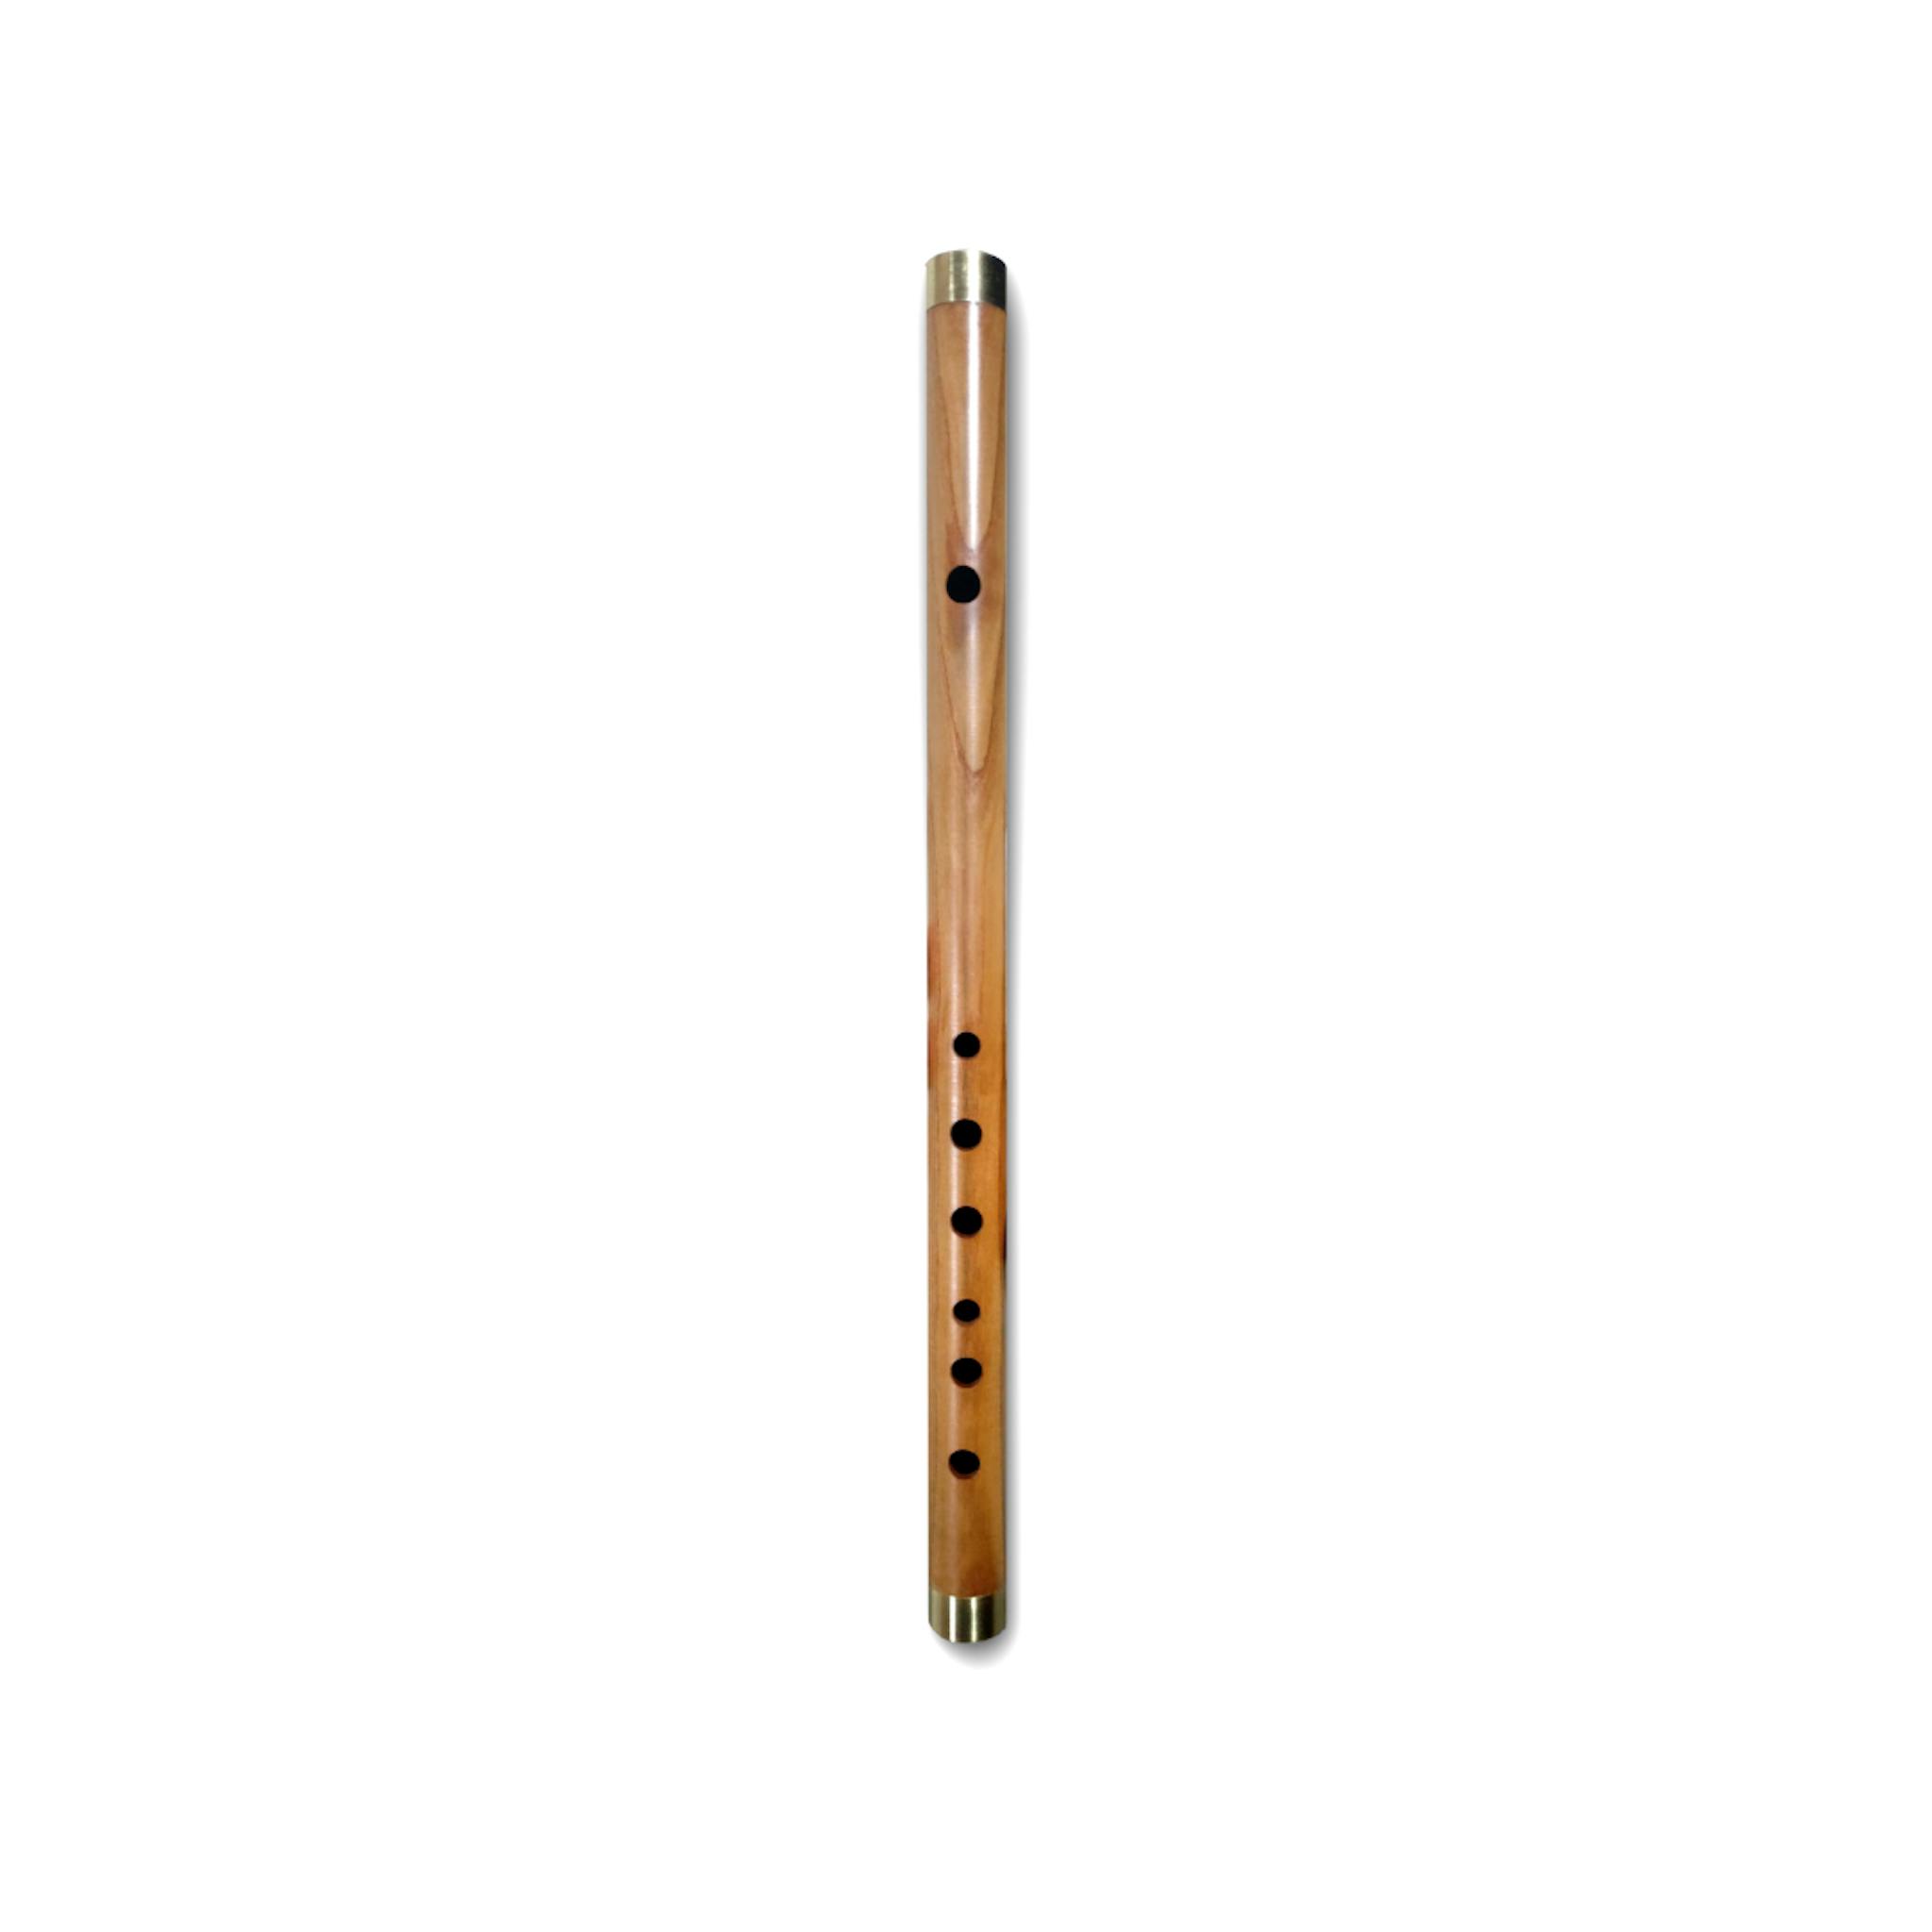 A wooden flute. 